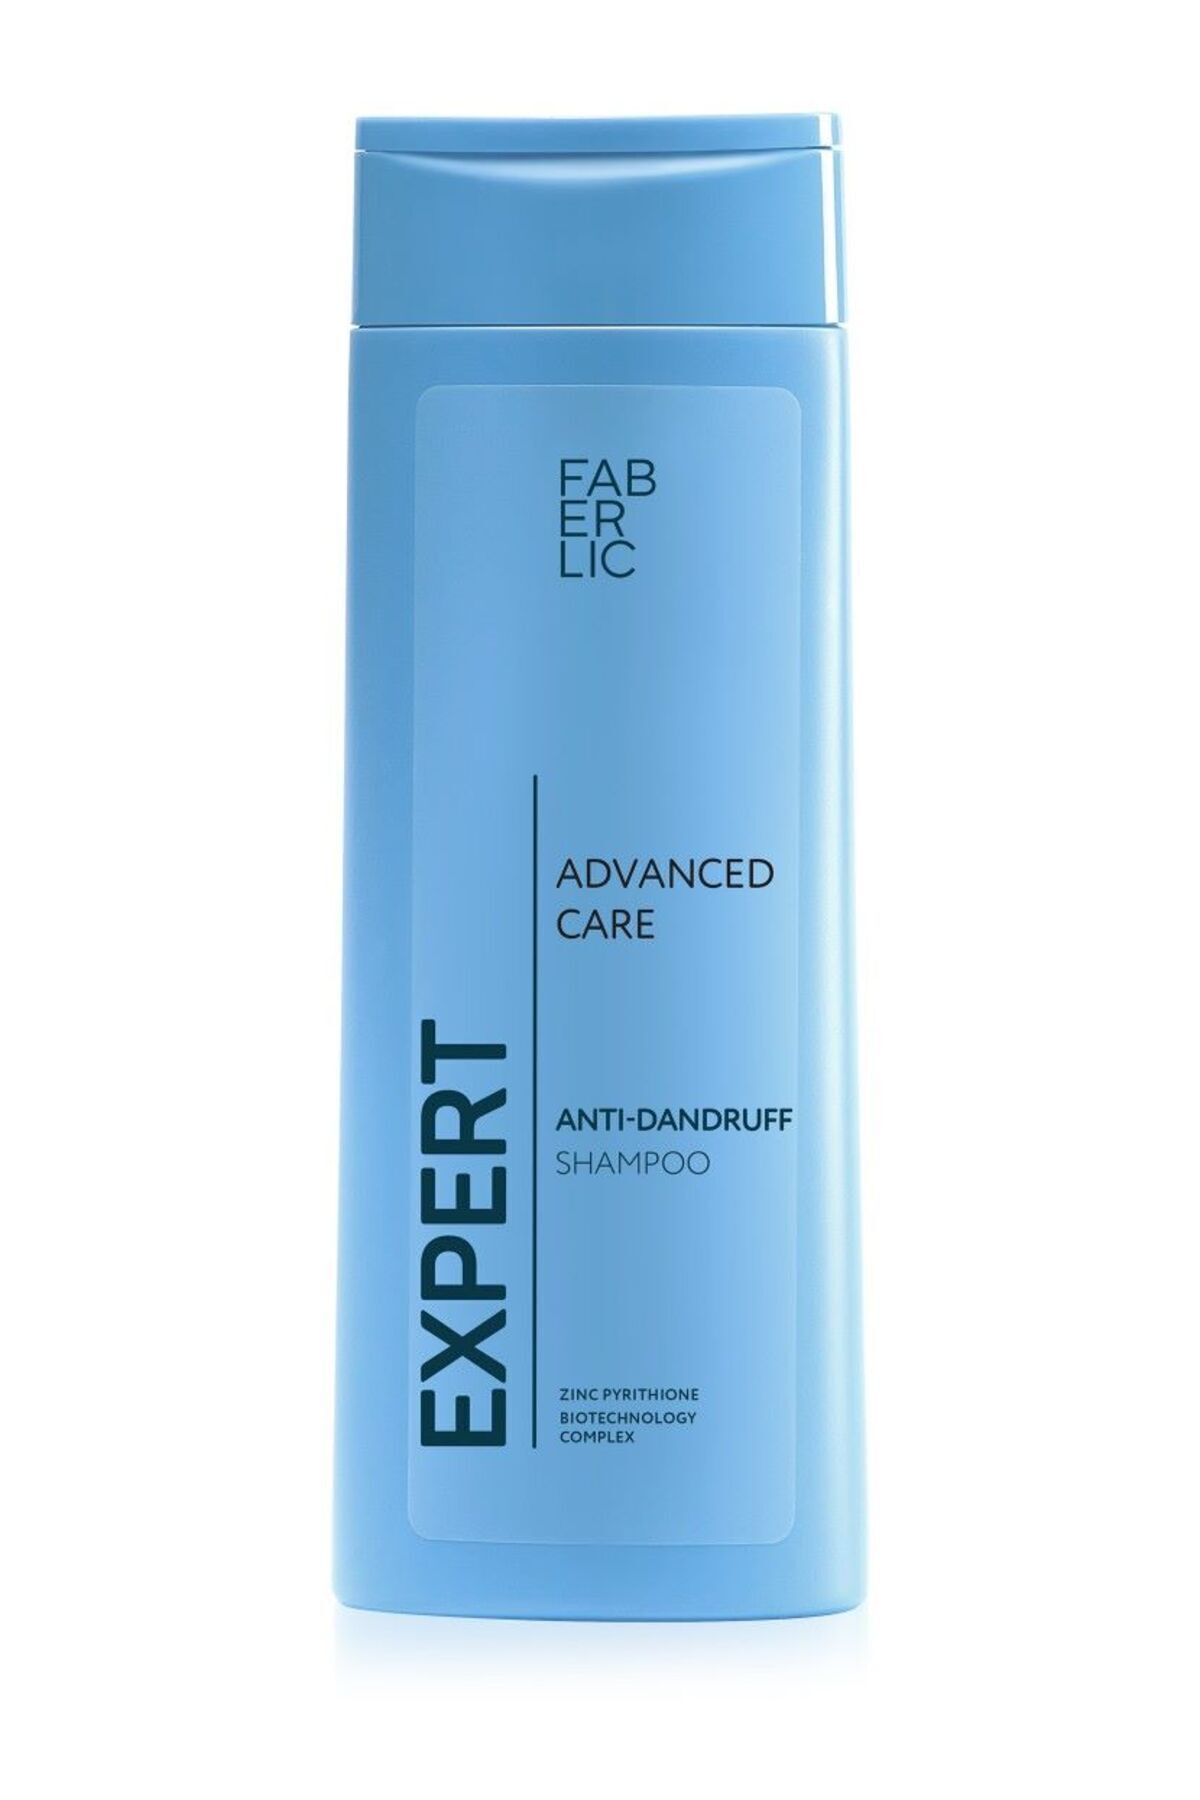 Faberlic Kepeğe Karşı Etkili Şampuan Expert Advanced Care*2767